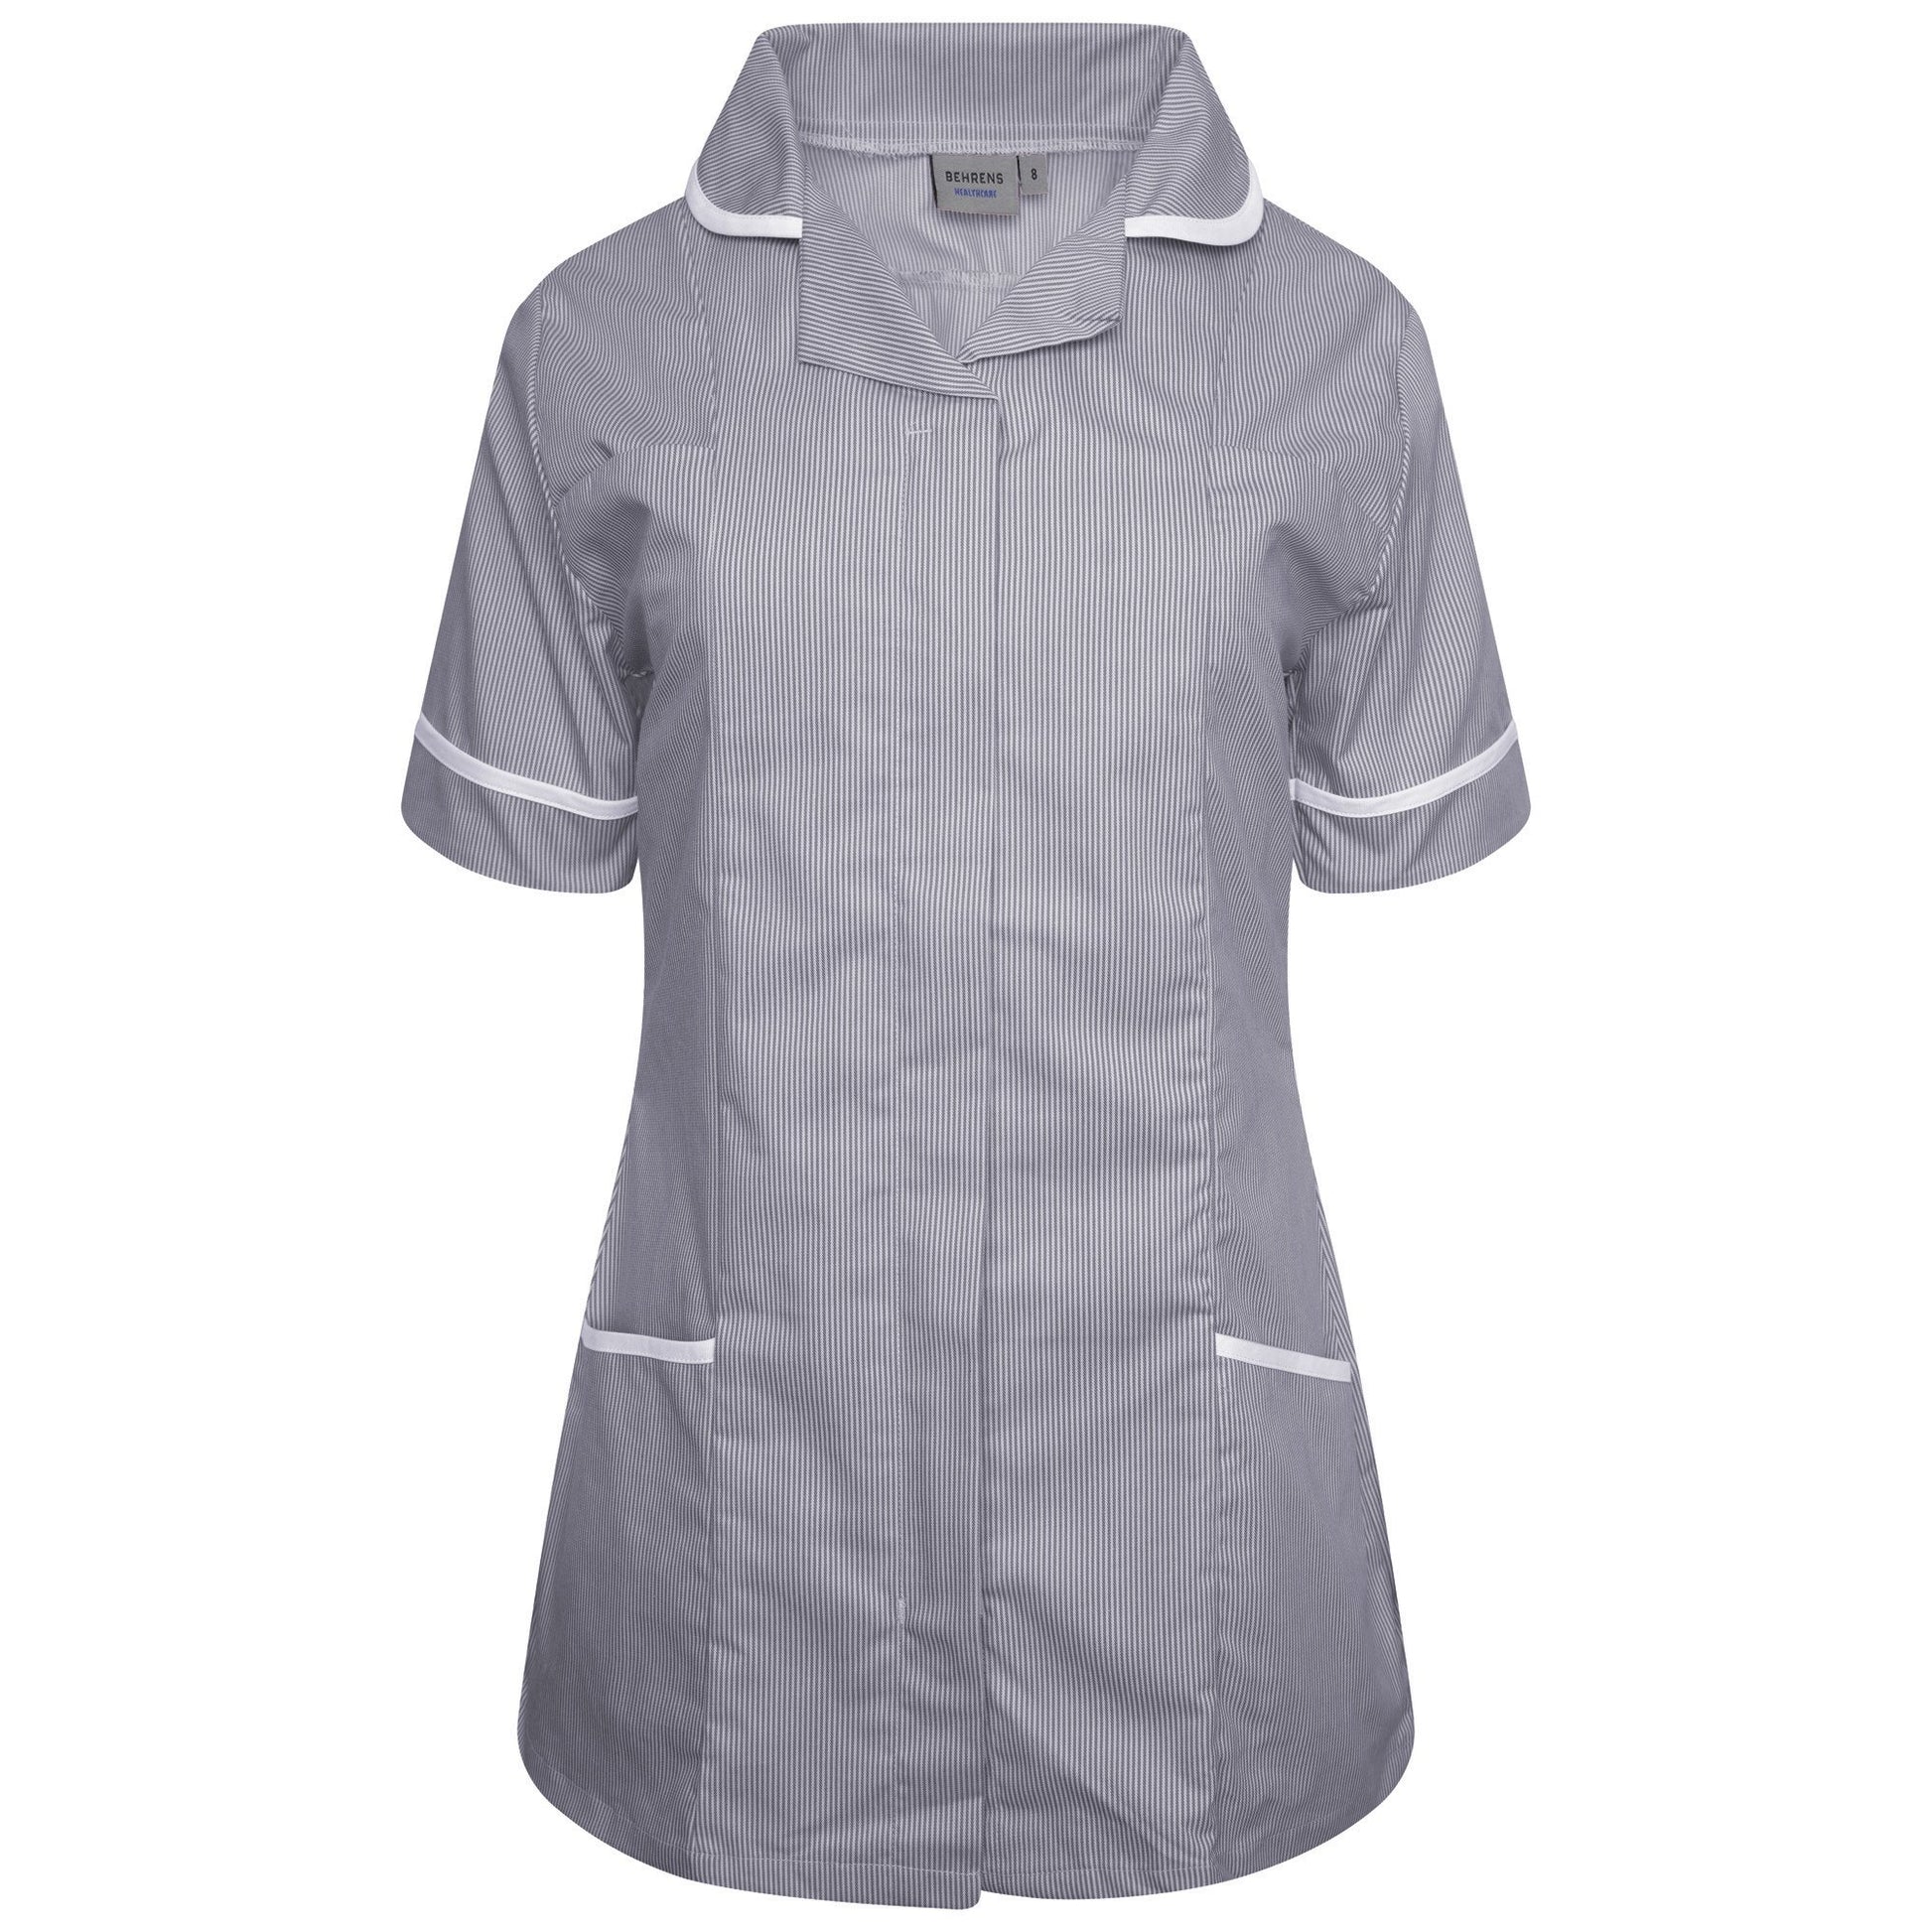 Behrens Striped Women's Healthcare Nurses Tunic - NCLTPS Navy/White Stripe/White Trim UK 8